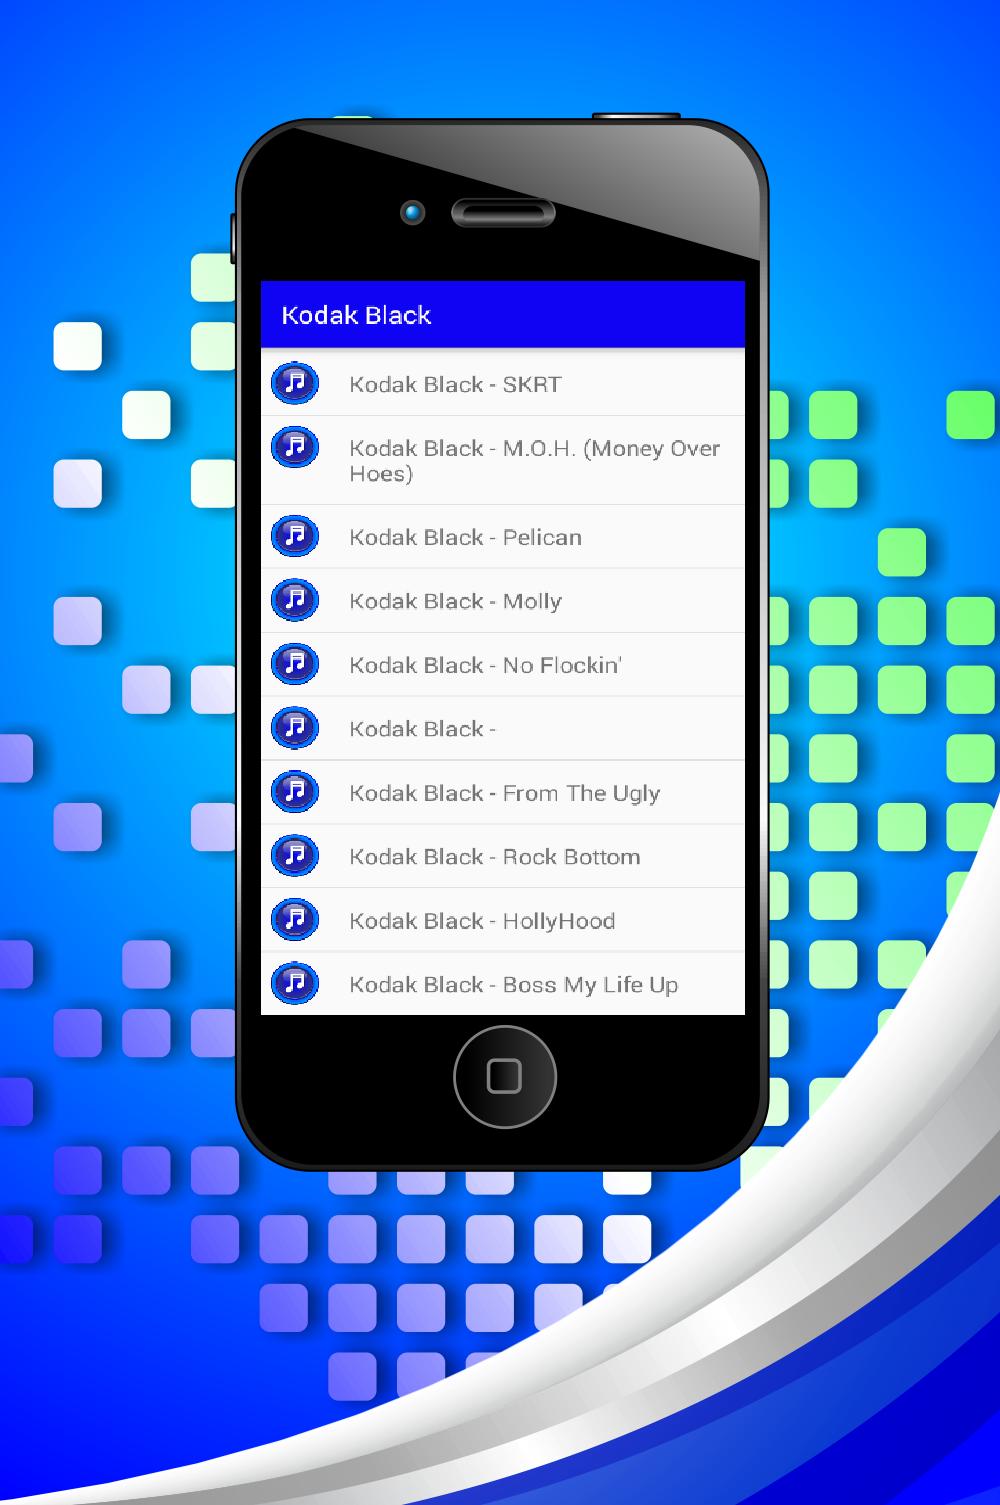 Kodak Black Songs For Android Apk Download